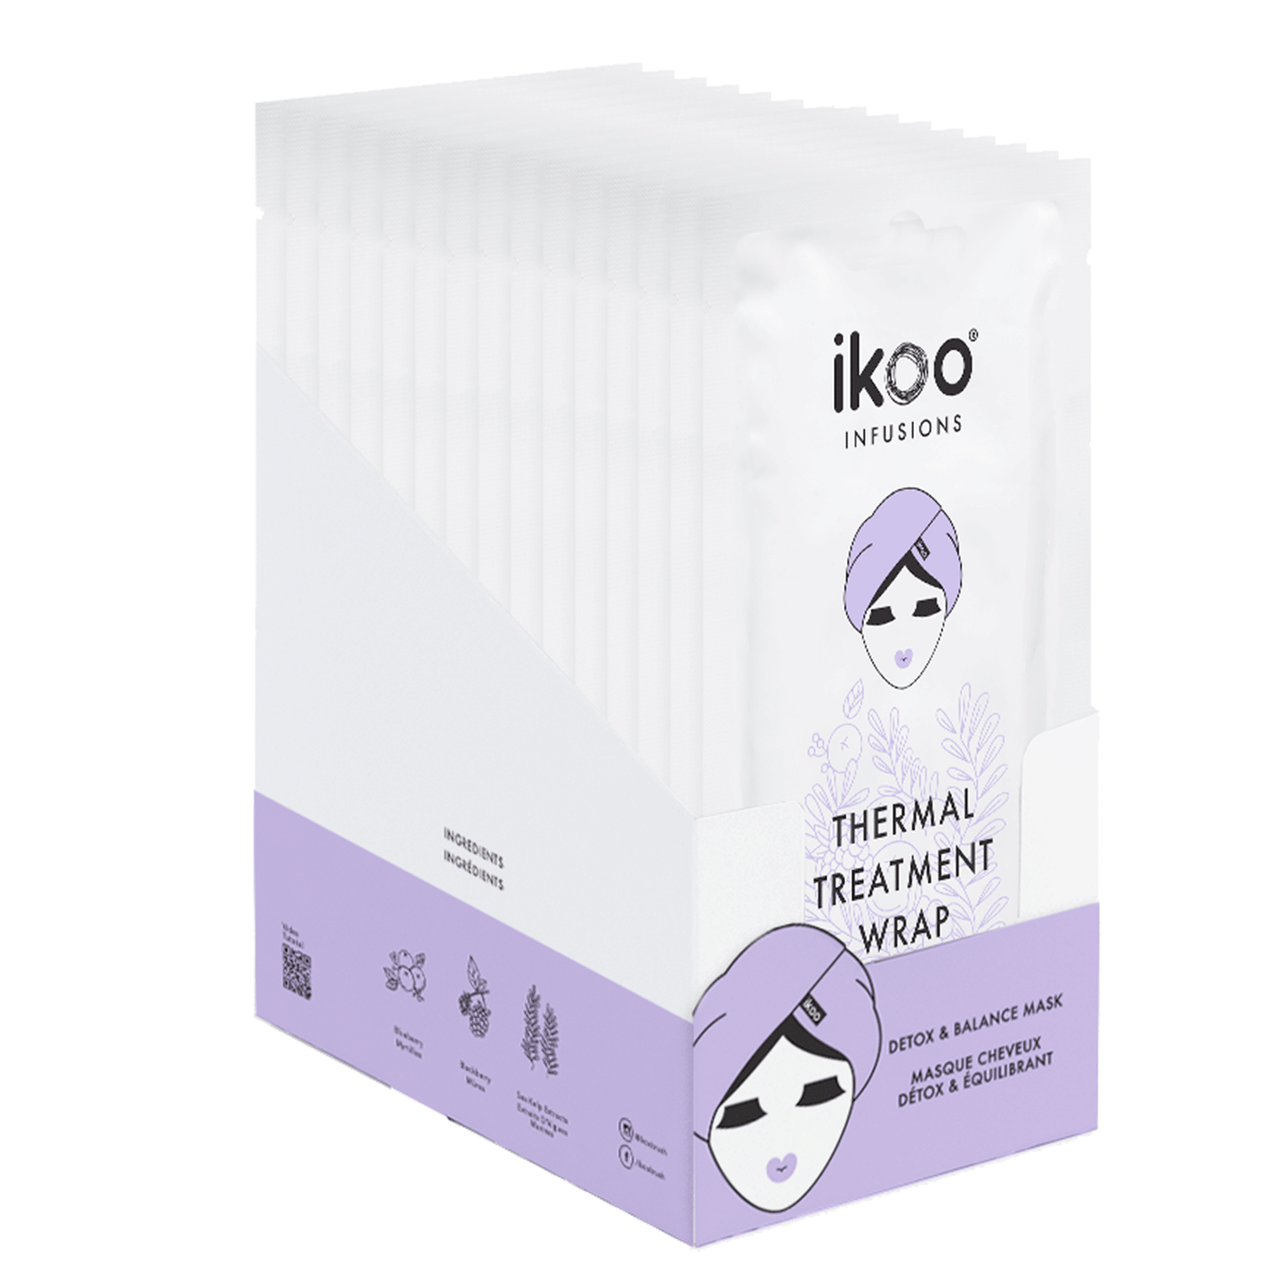 ikoo Thermal Treatment Wrap Detox & Balance 15-Count 